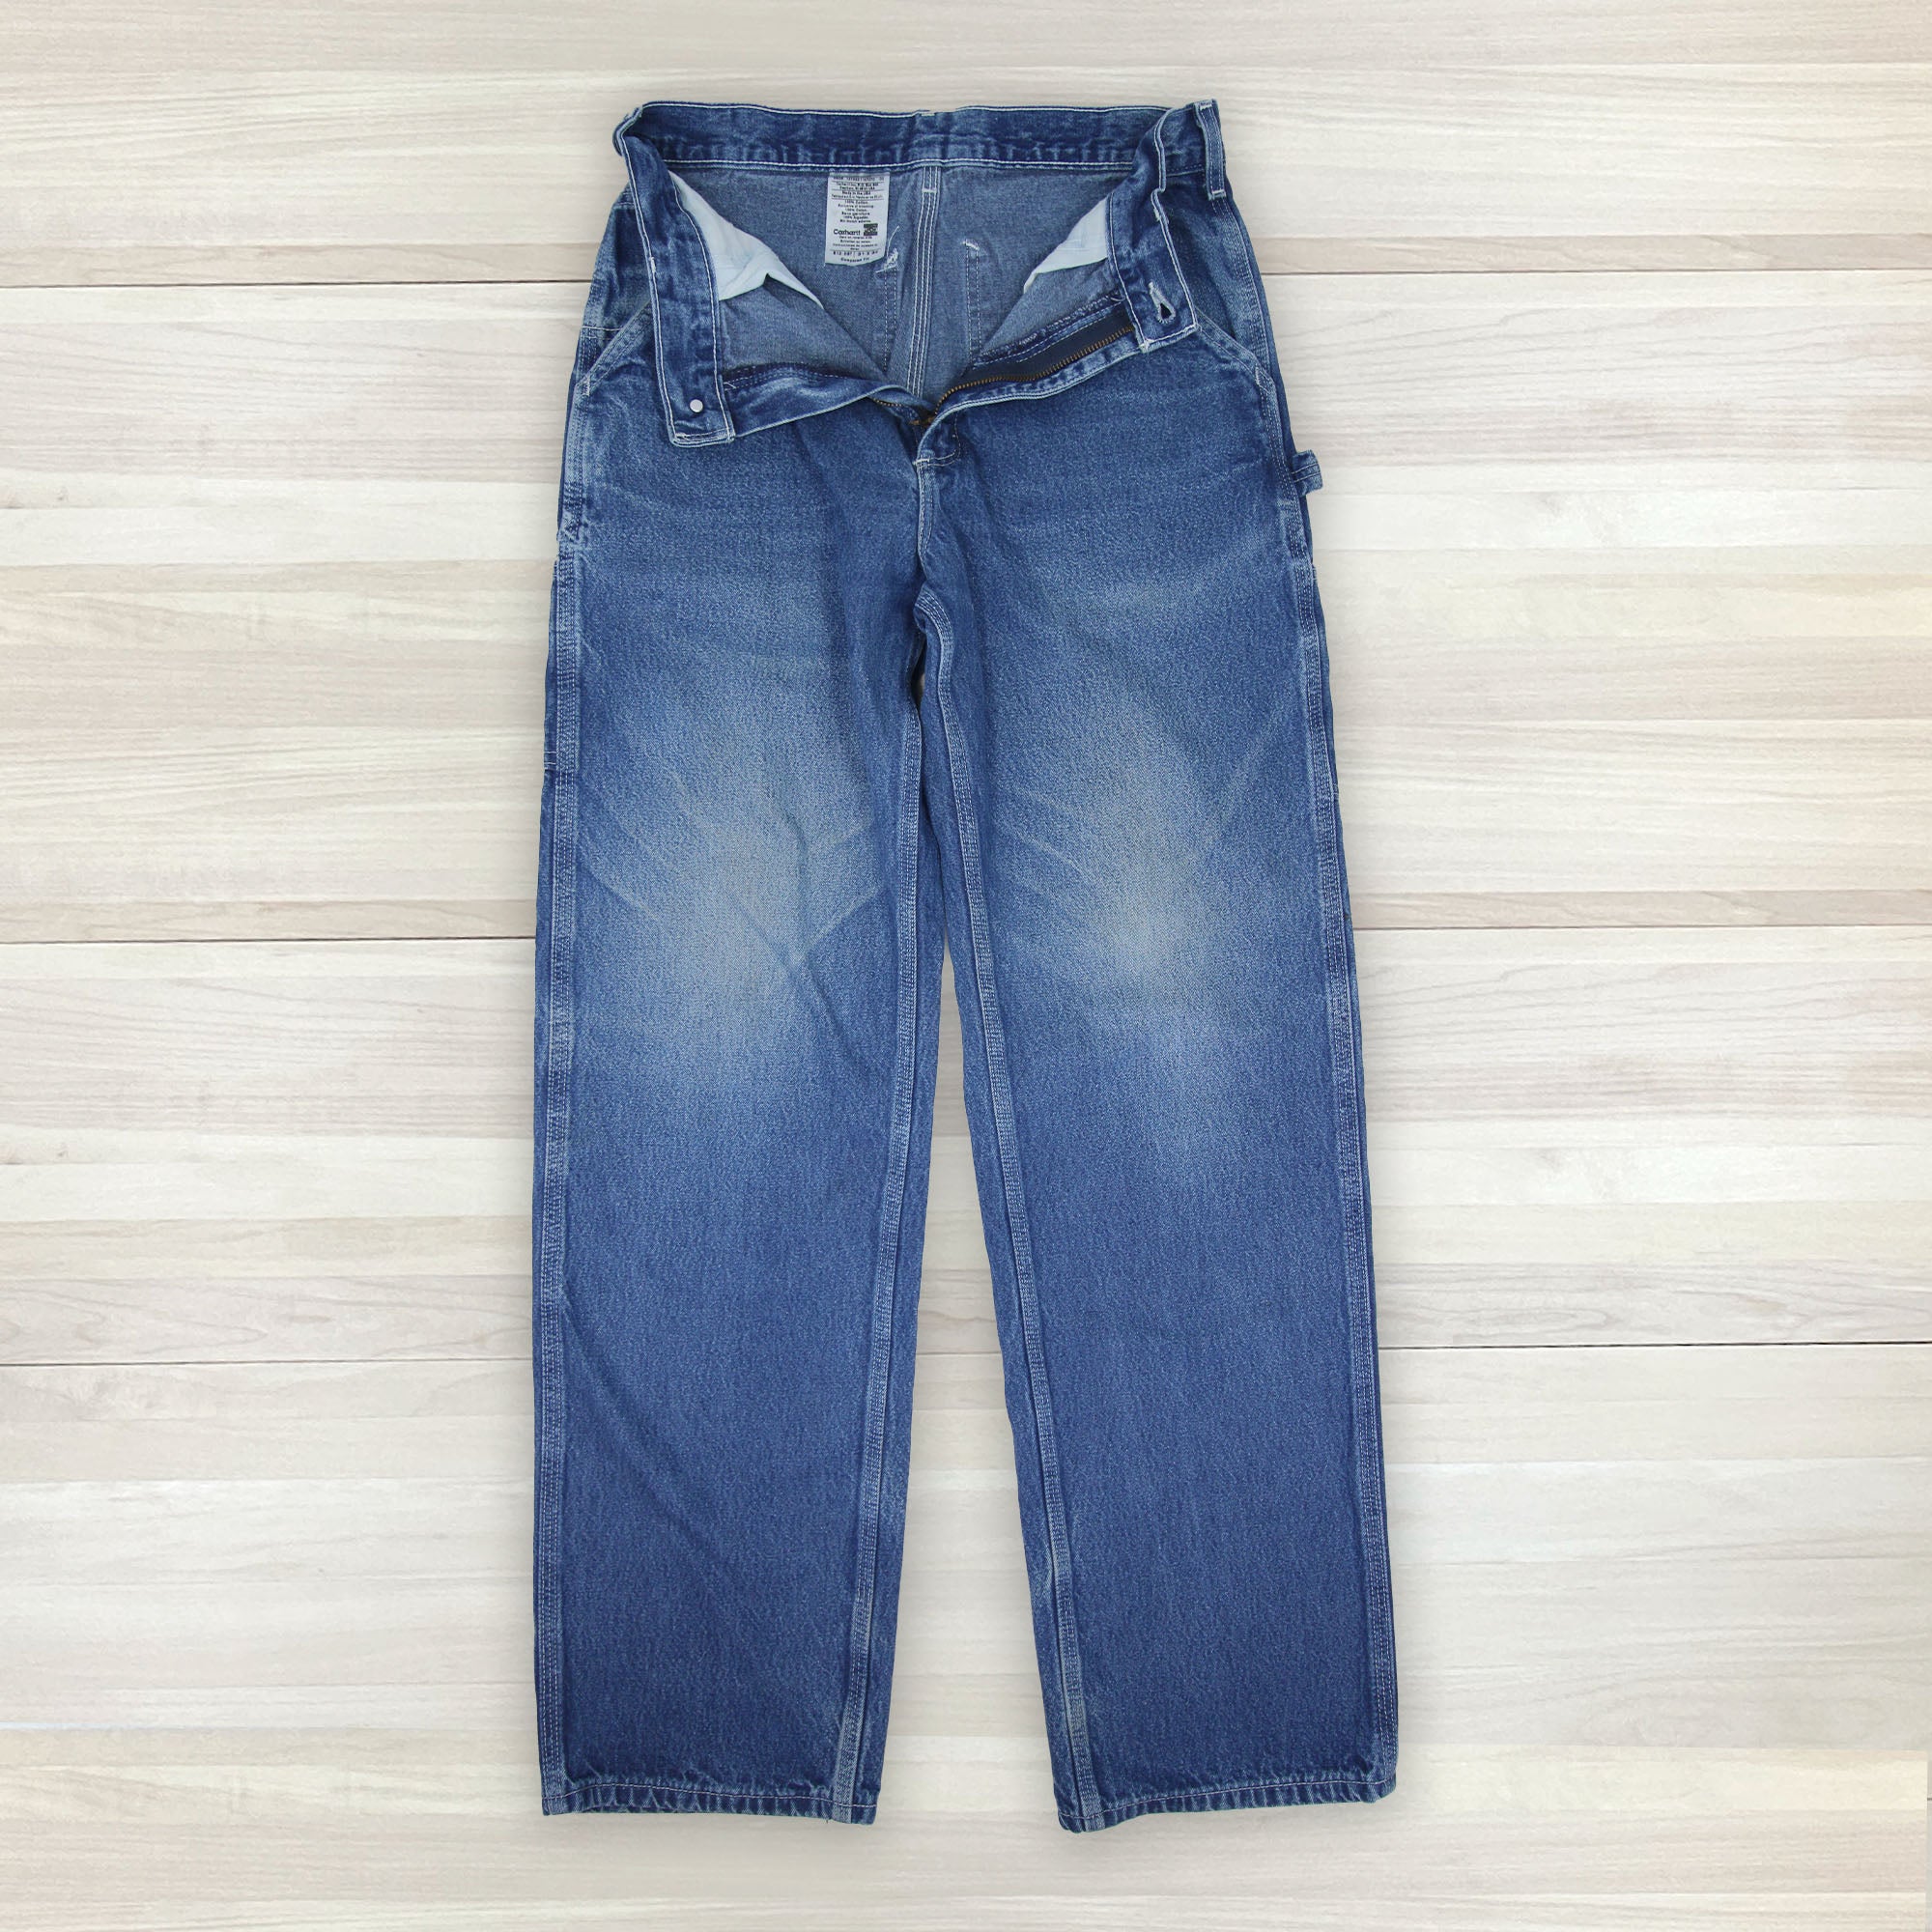 Men's Carhartt B13 DST Carpenter Jeans - Measures 30x33-2